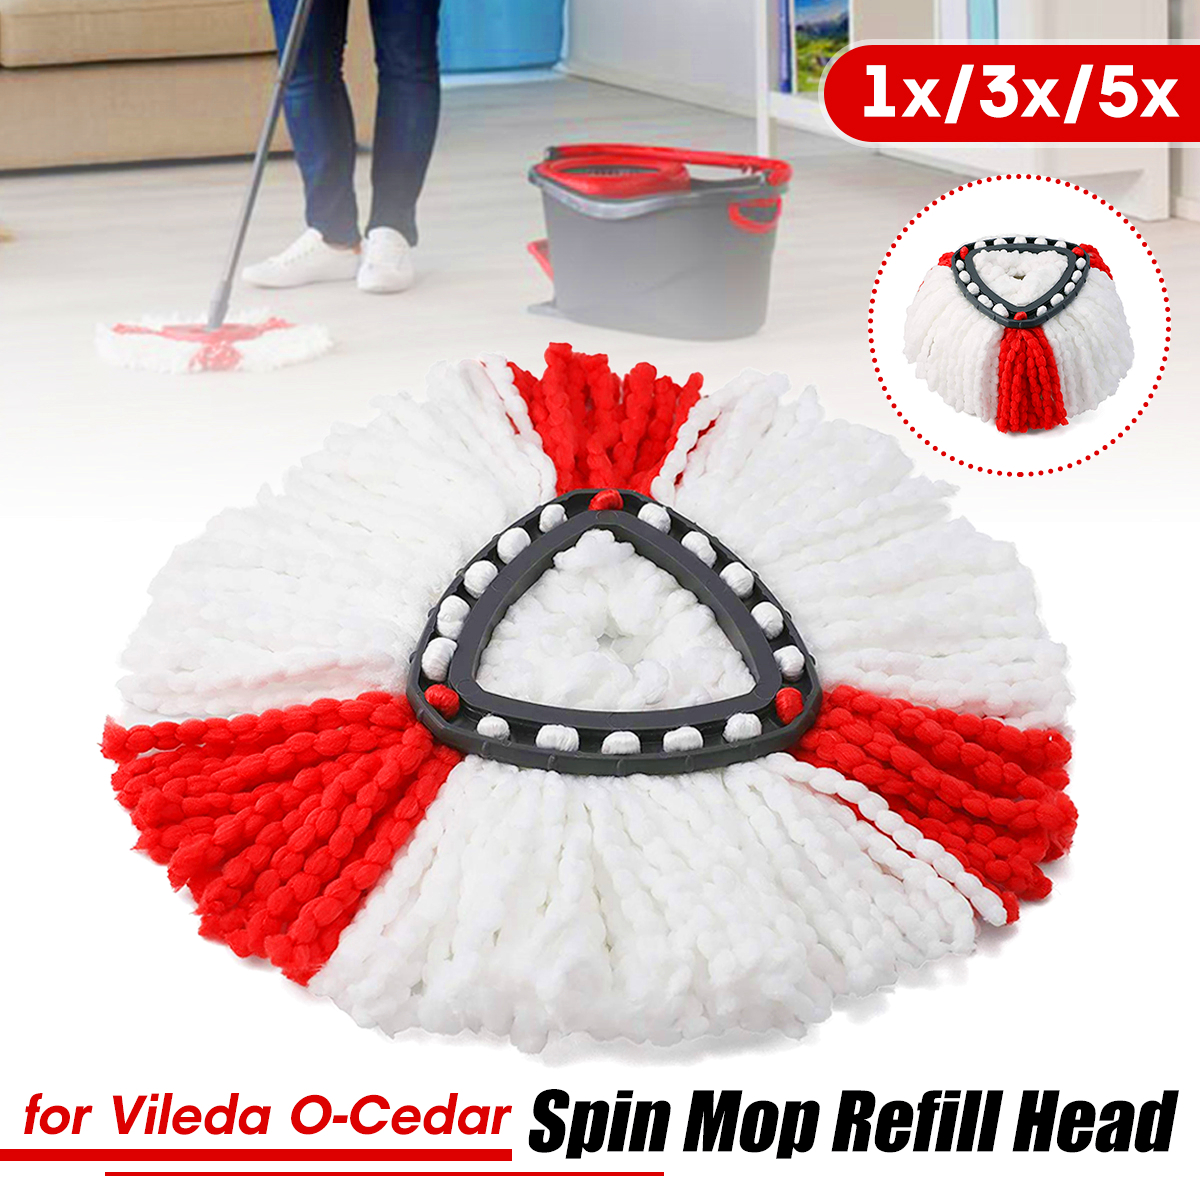 Microfiber-Spin-Mop-Refill-Head-Replacement-For-Vileda-O-Cedar-EasyWring-1567956-1